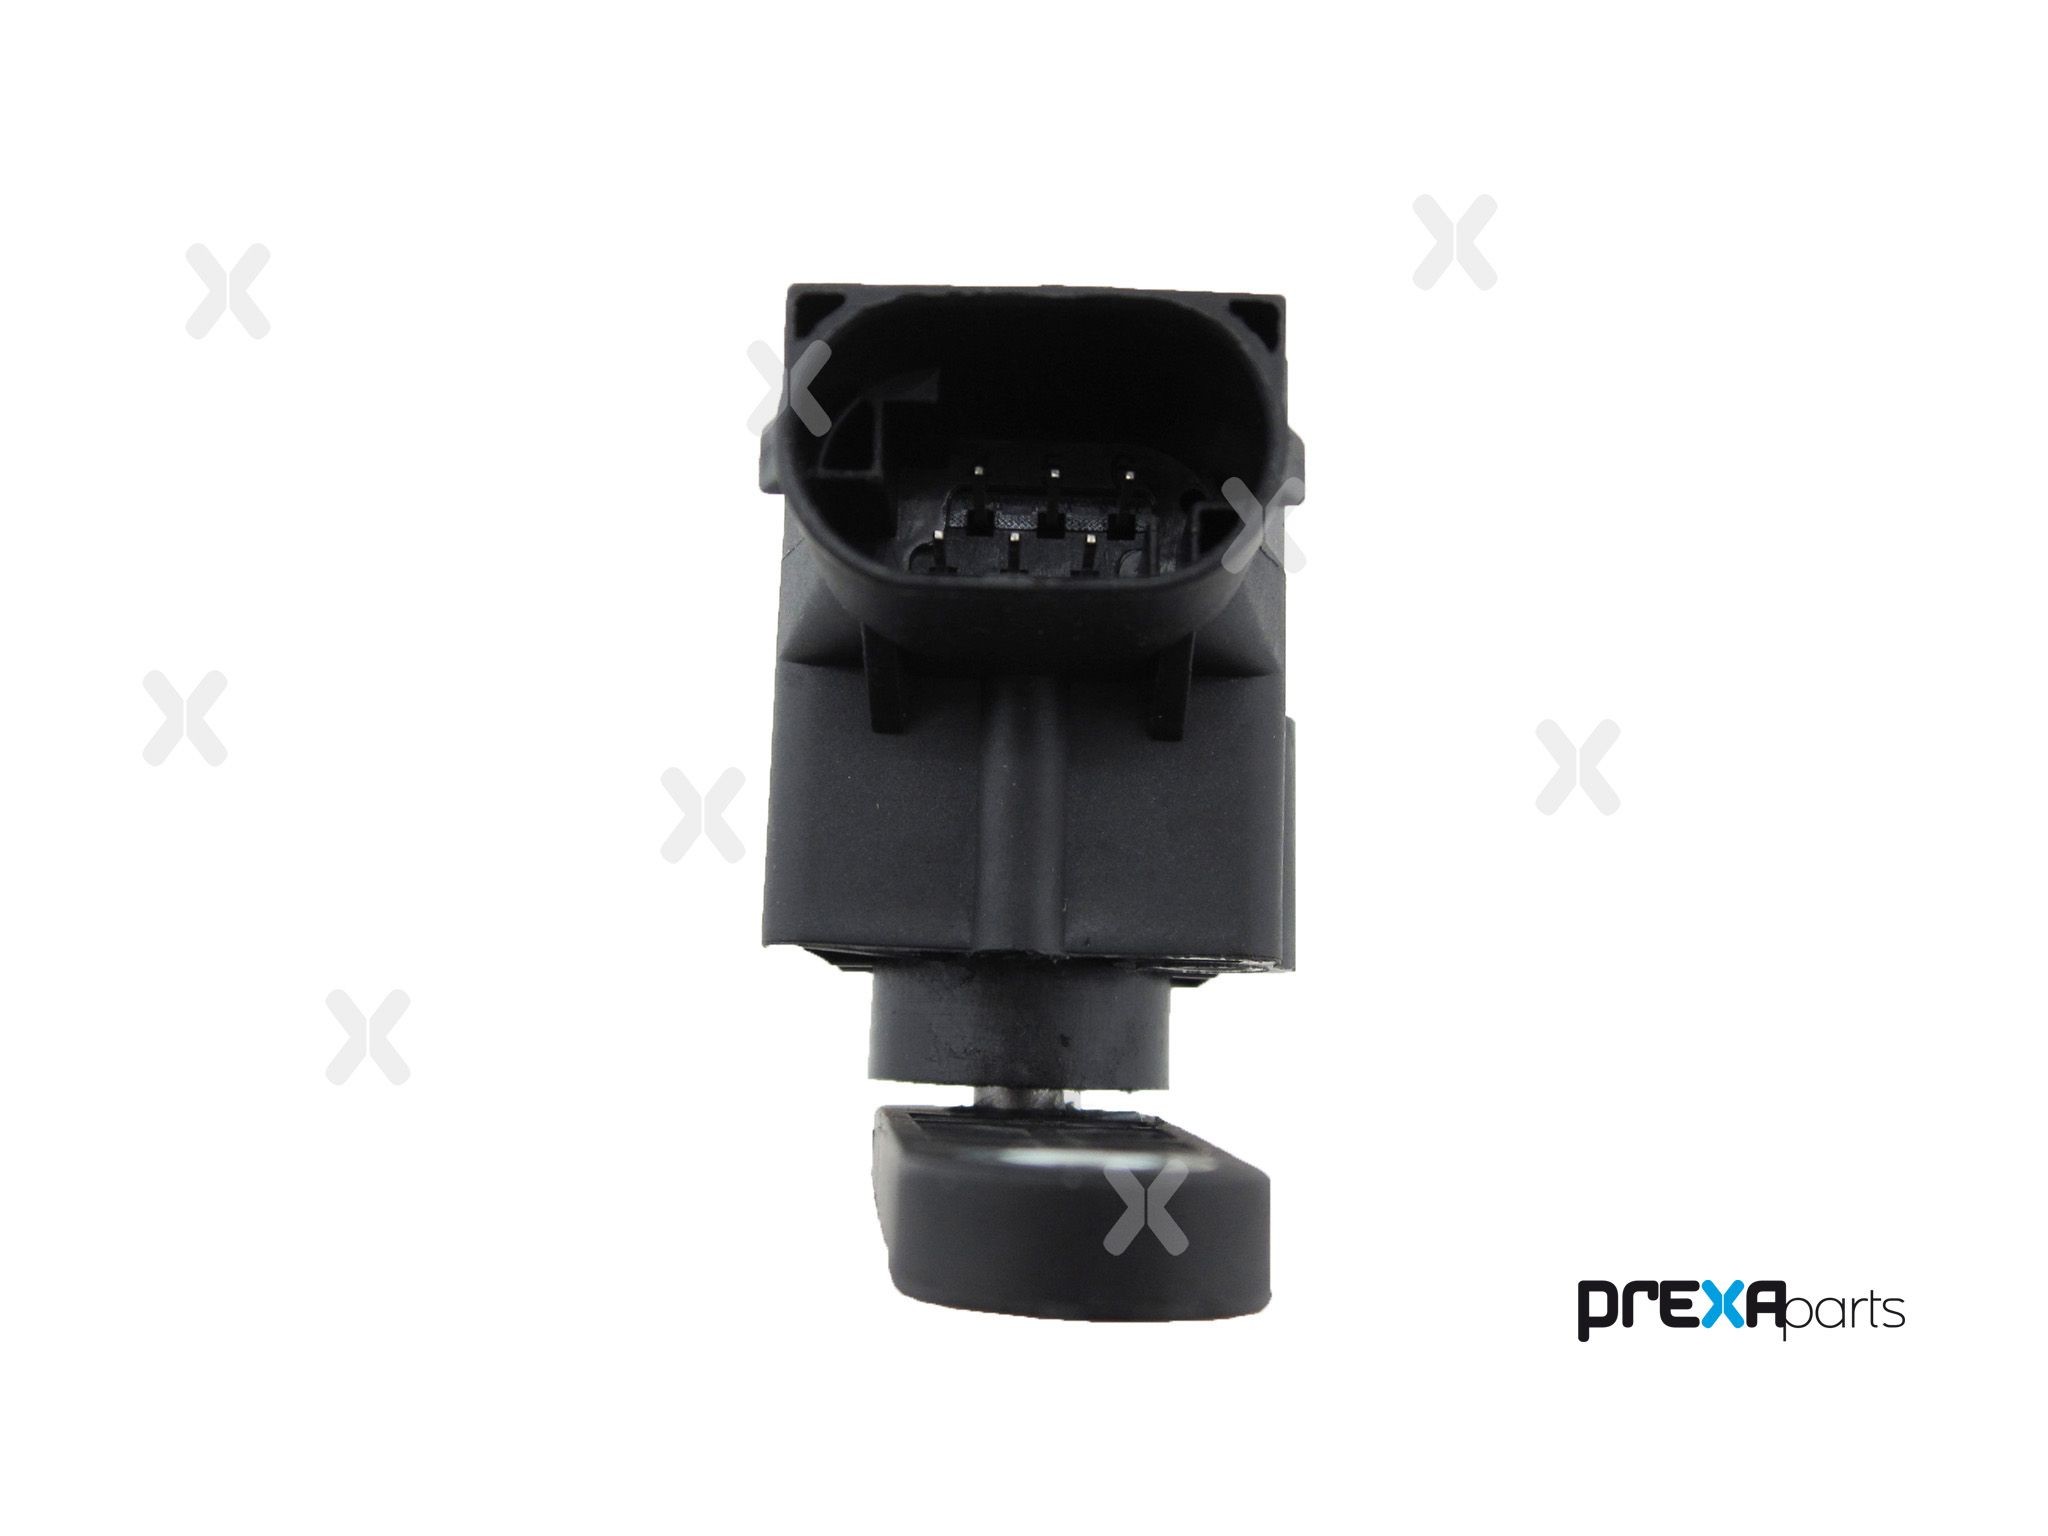 PREXAparts P203009 Sensor, Xenon light (headlight range adjustment) 01 41 4 44